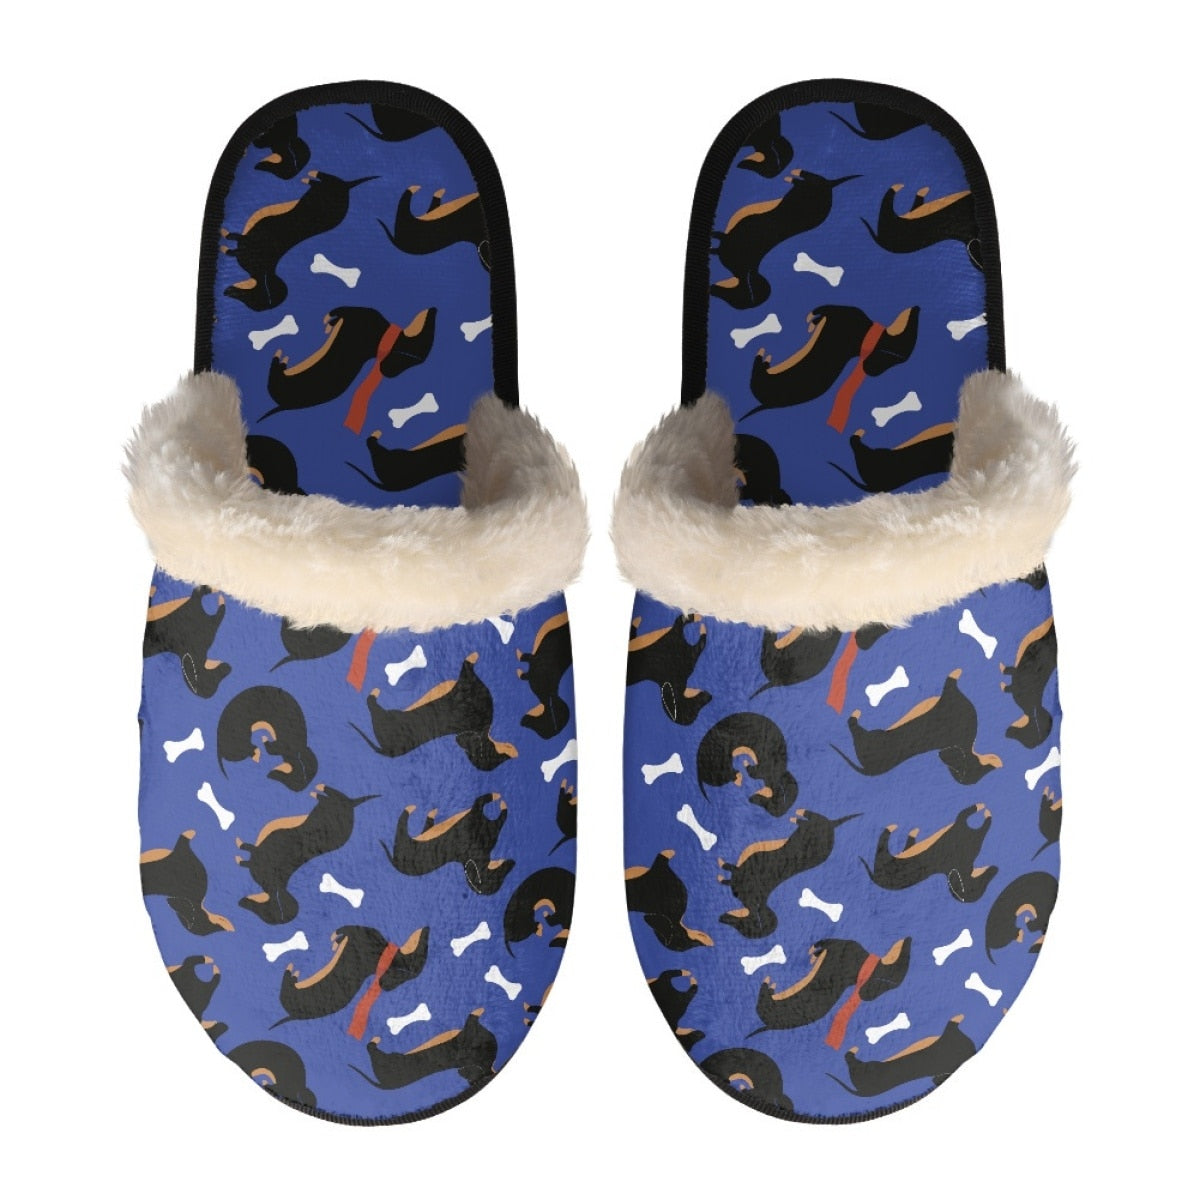 Dachshund Printed Winter Slippers